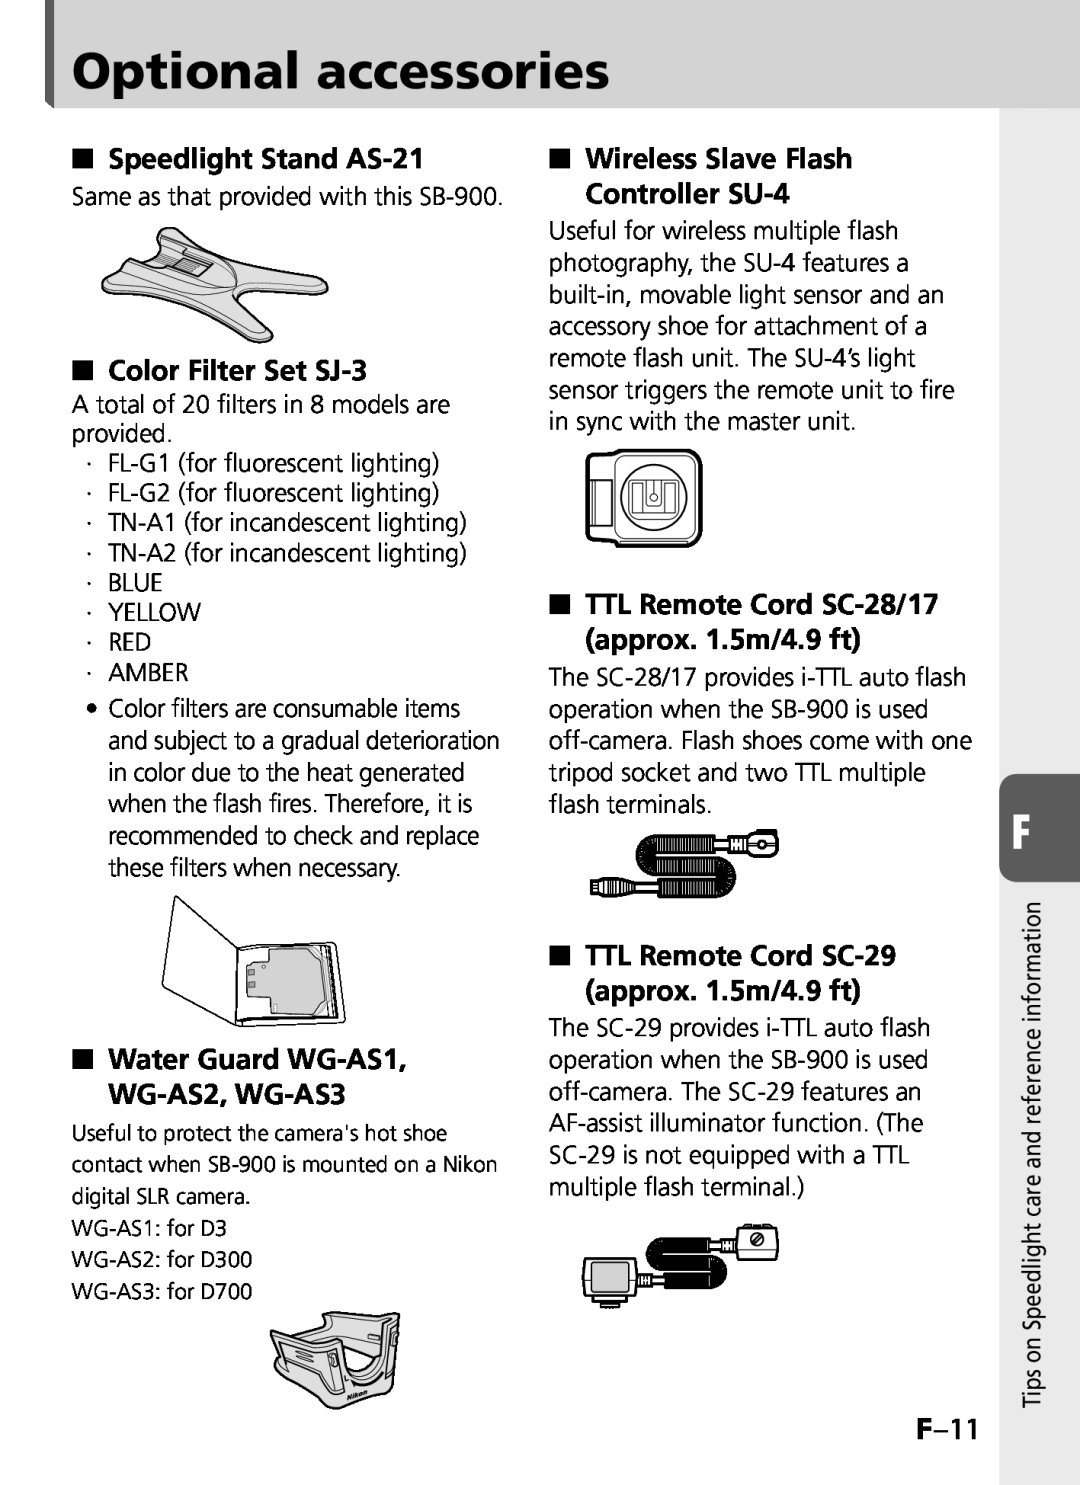 Univex SB-900 user manual Optional accessories, F–11, Speedlight Stand AS-21, Color Filter Set SJ-3 